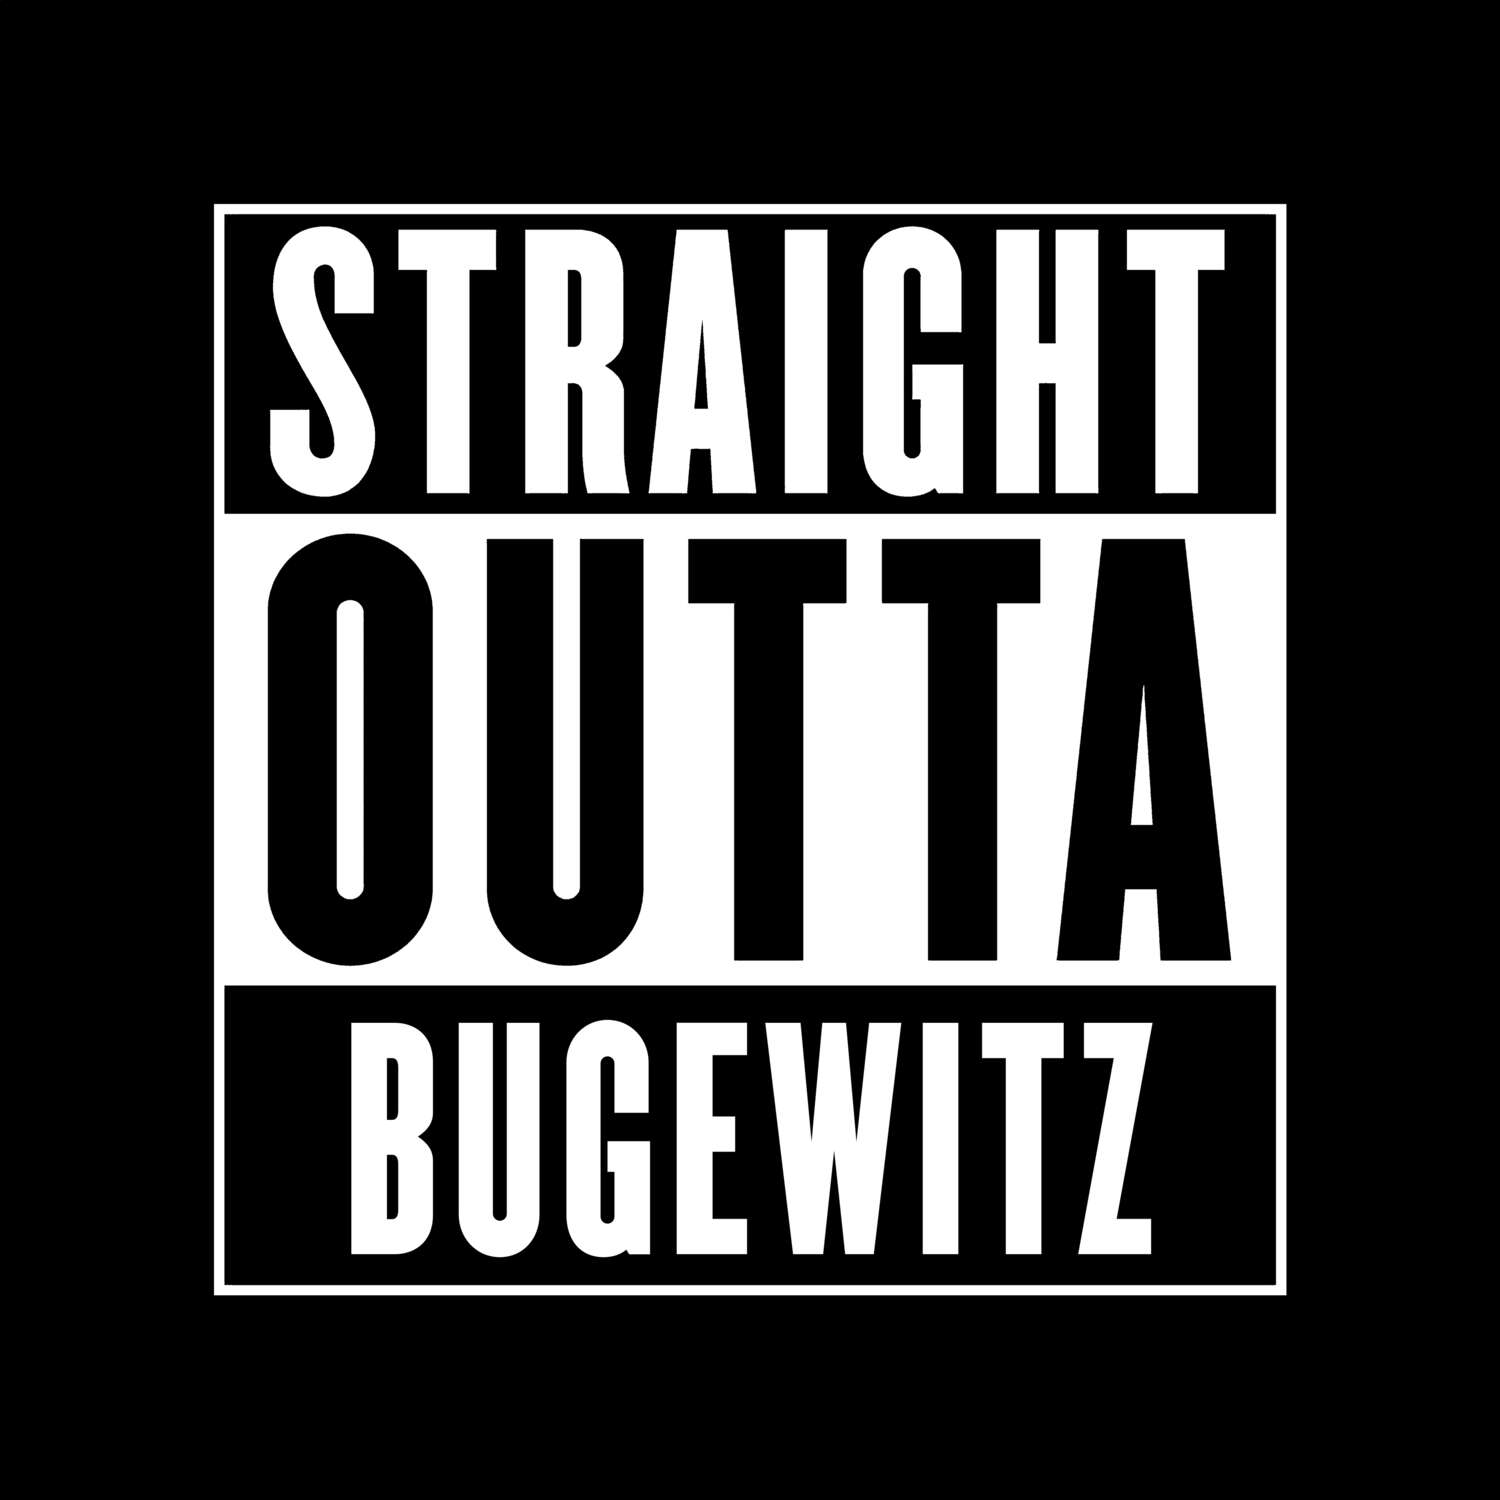 Bugewitz T-Shirt »Straight Outta«